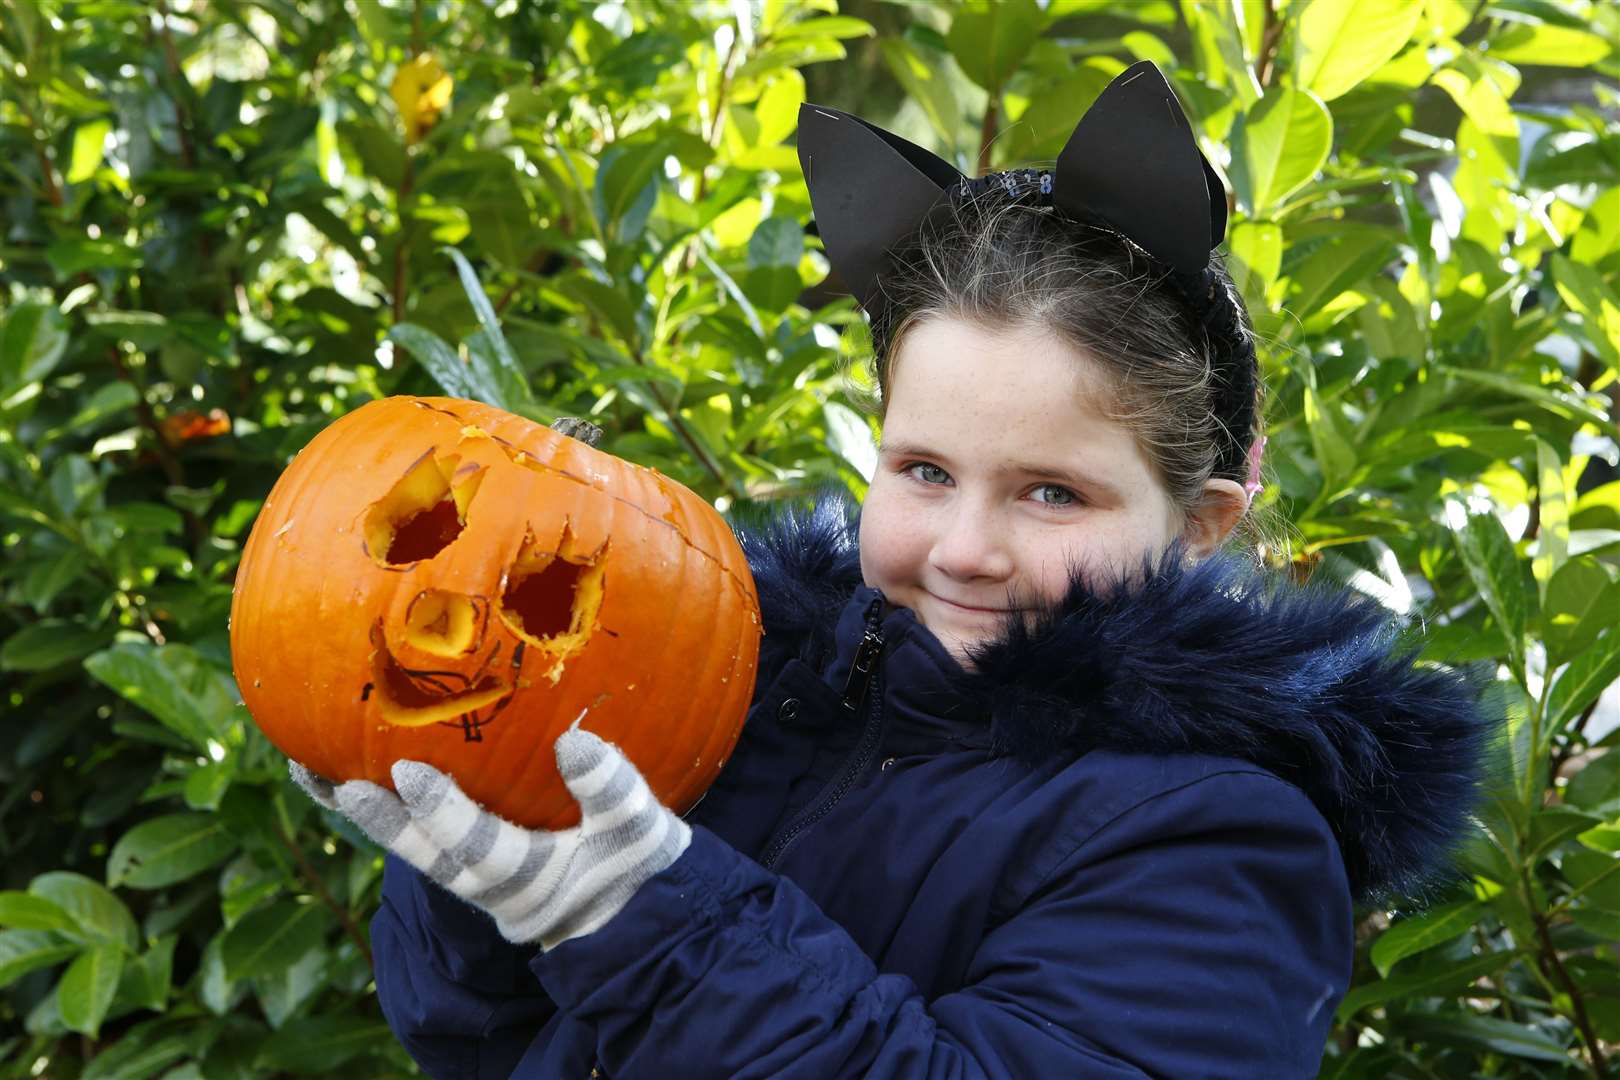 Pumpkin carving in Lullingstone last year